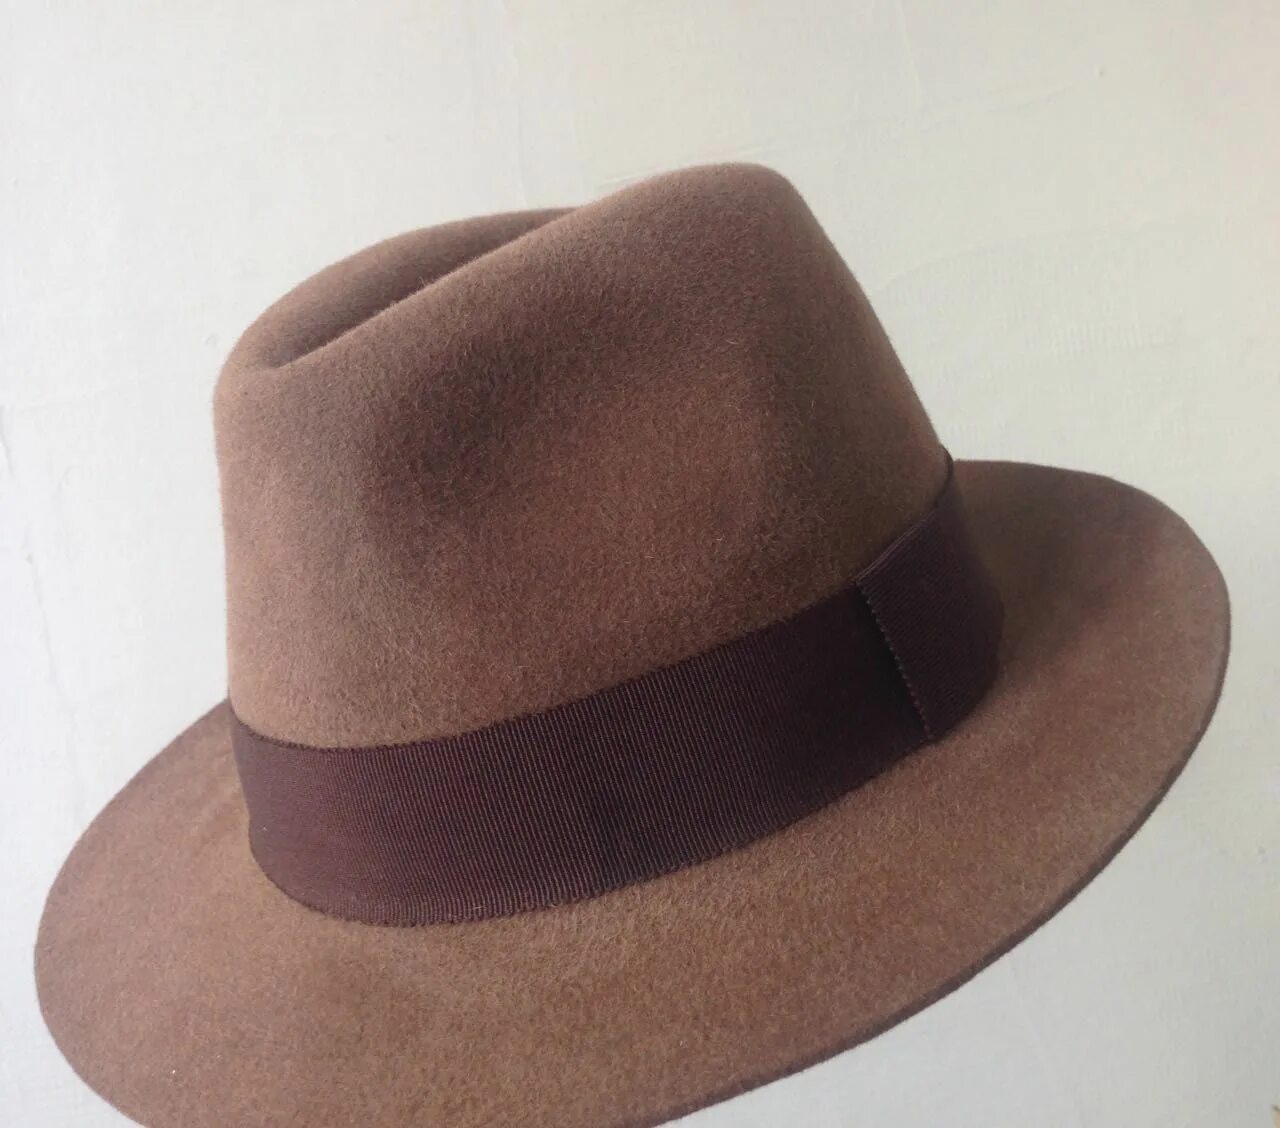 Мужская шляпа Криспи. Eureka шляпа мужская. Фетровая шляпа Федора Бове. Мужчина в шляпе. Шляпа купить авито